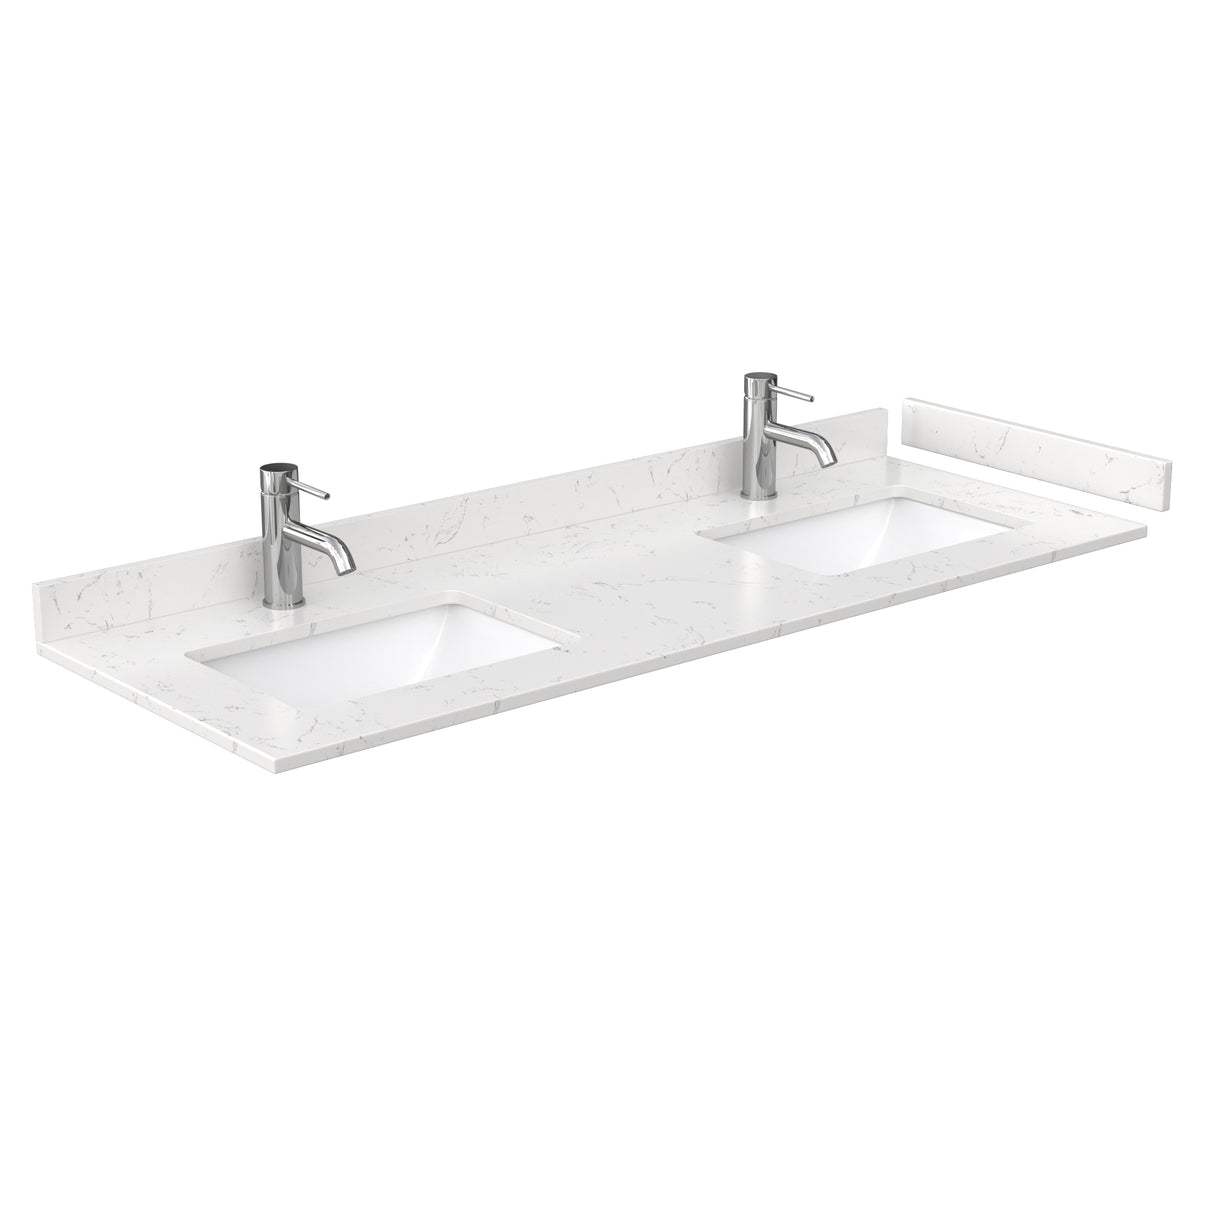 Daria 60 Inch Double Bathroom Vanity in White Carrara Cultured Marble Countertop Undermount Square Sinks No Mirror